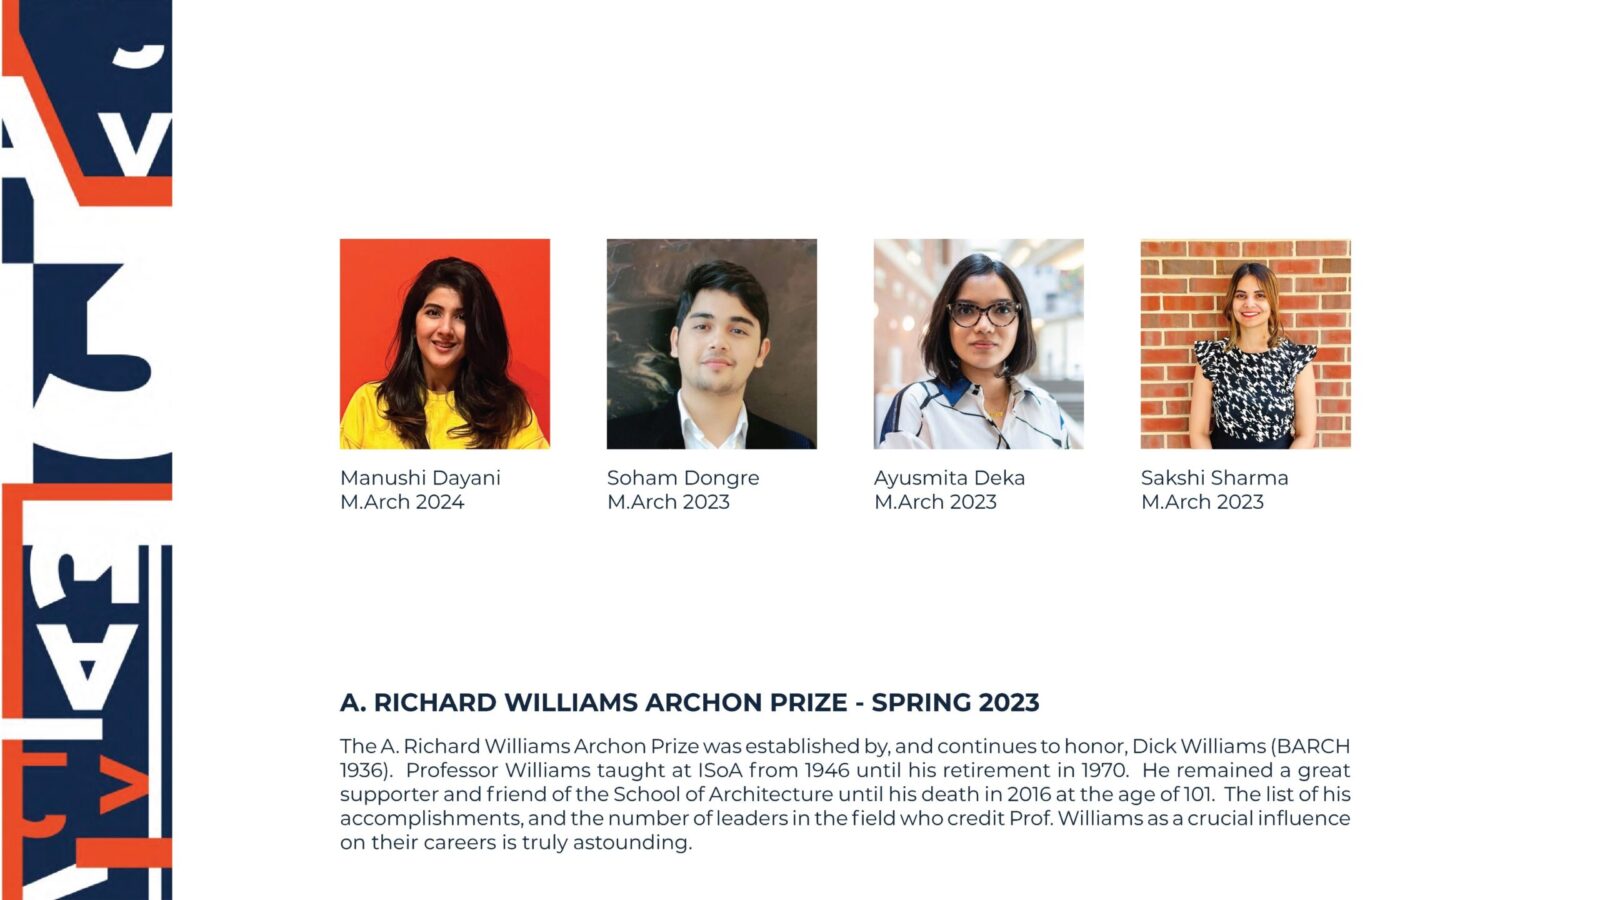 A. Richard Williams Archon Prize